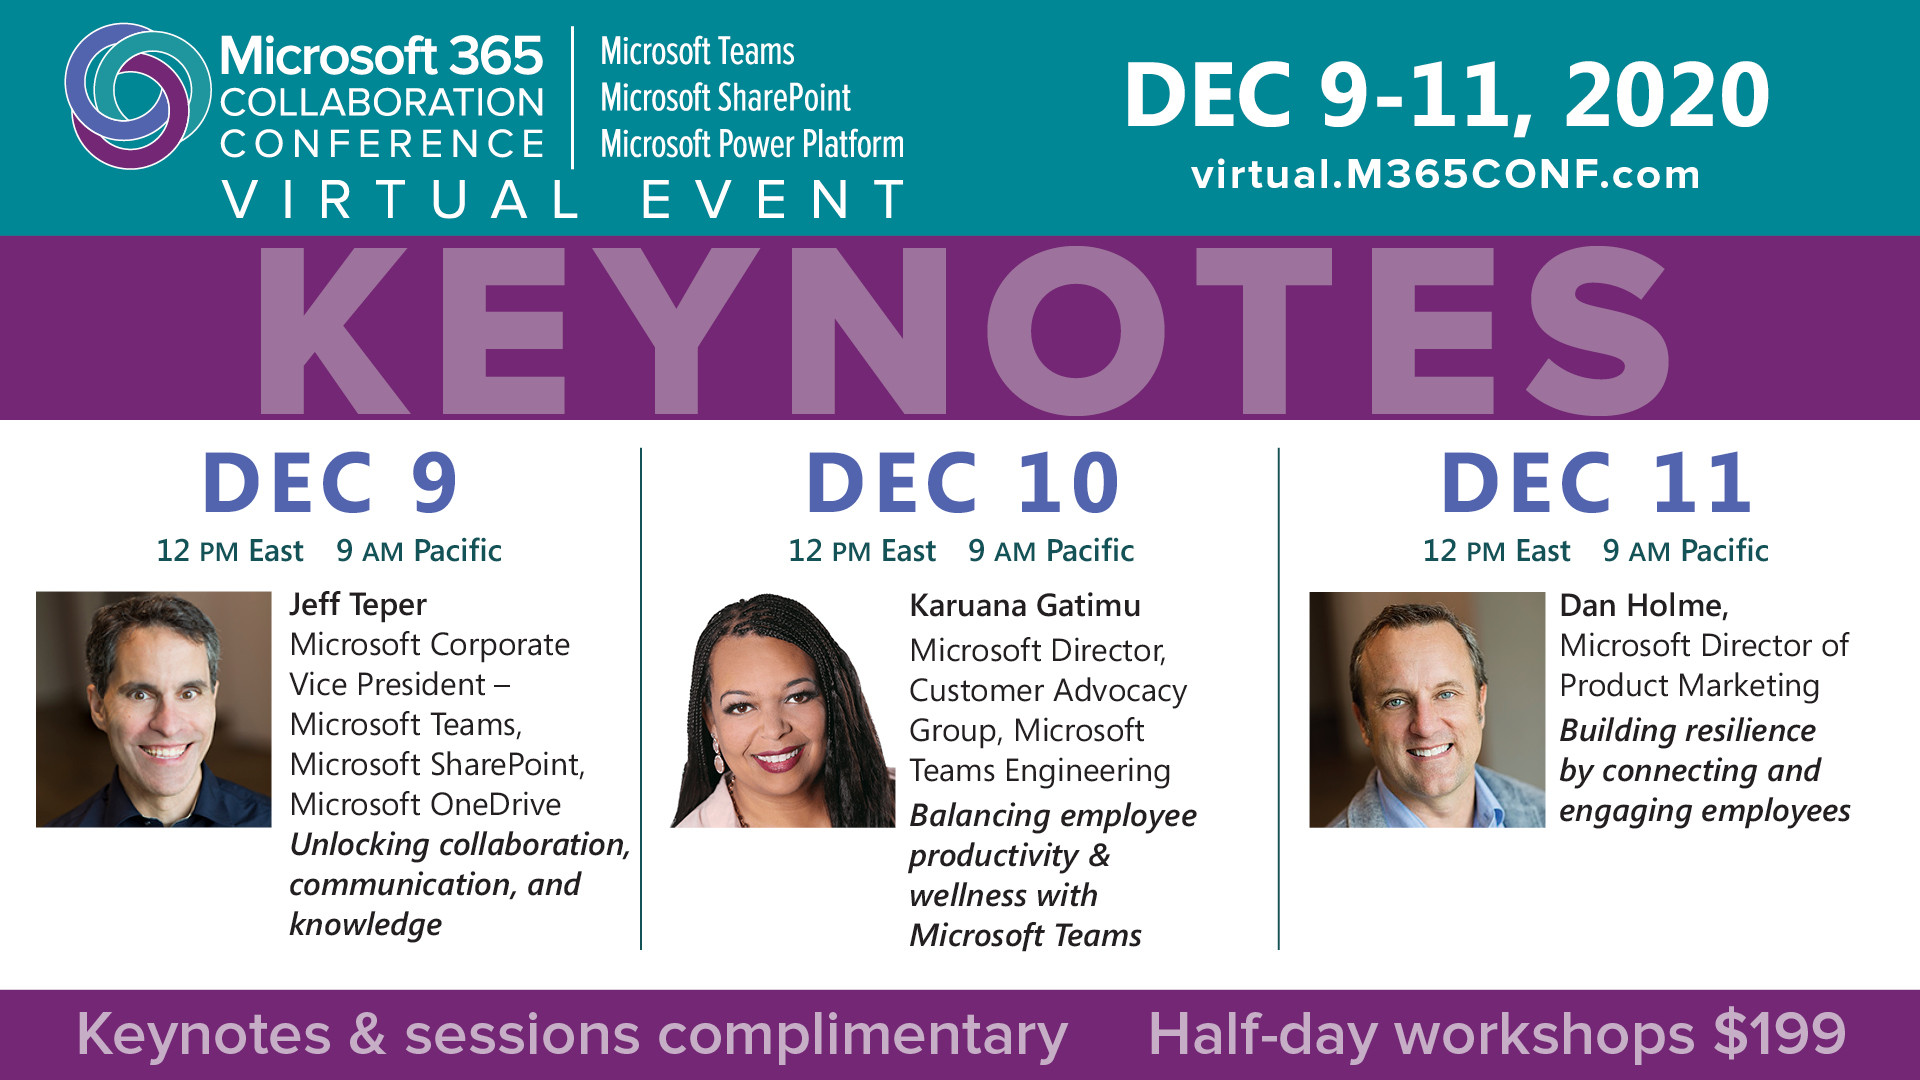 Microsoft 365 Collaboration Conference Virtual Event